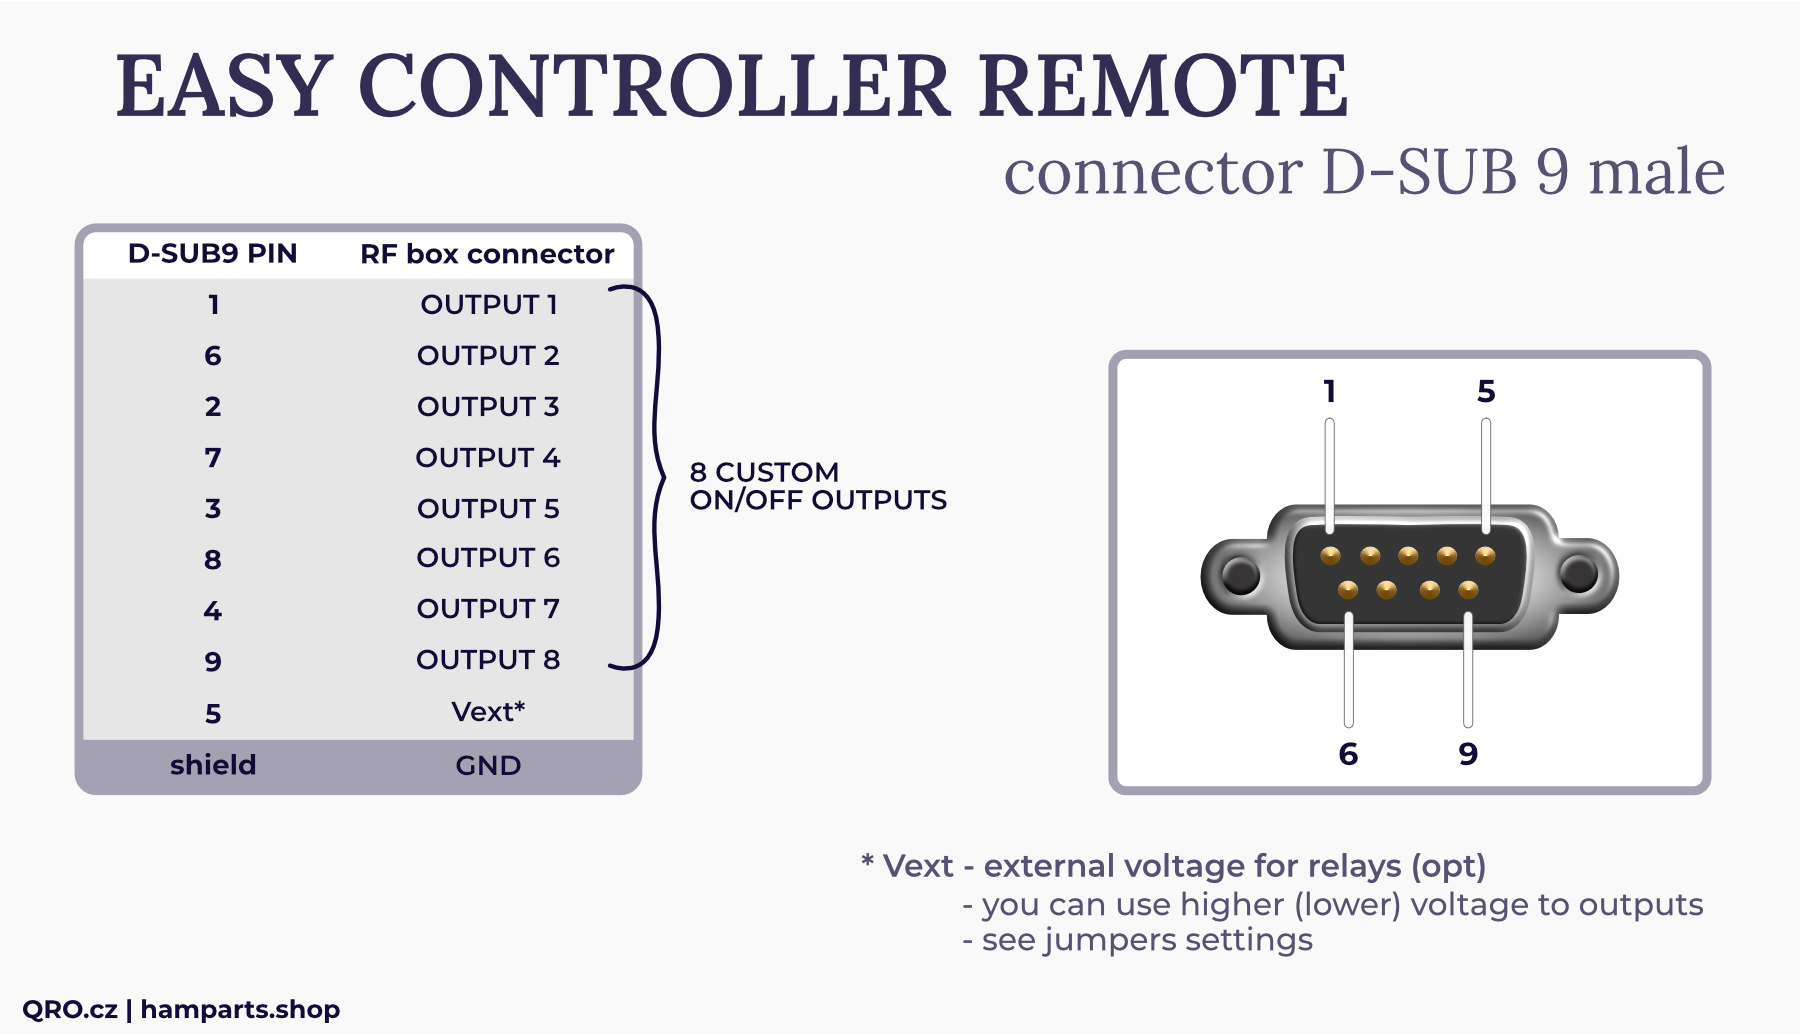 easy controller remote version connector D-sub9 qro.cz hamparts.shop